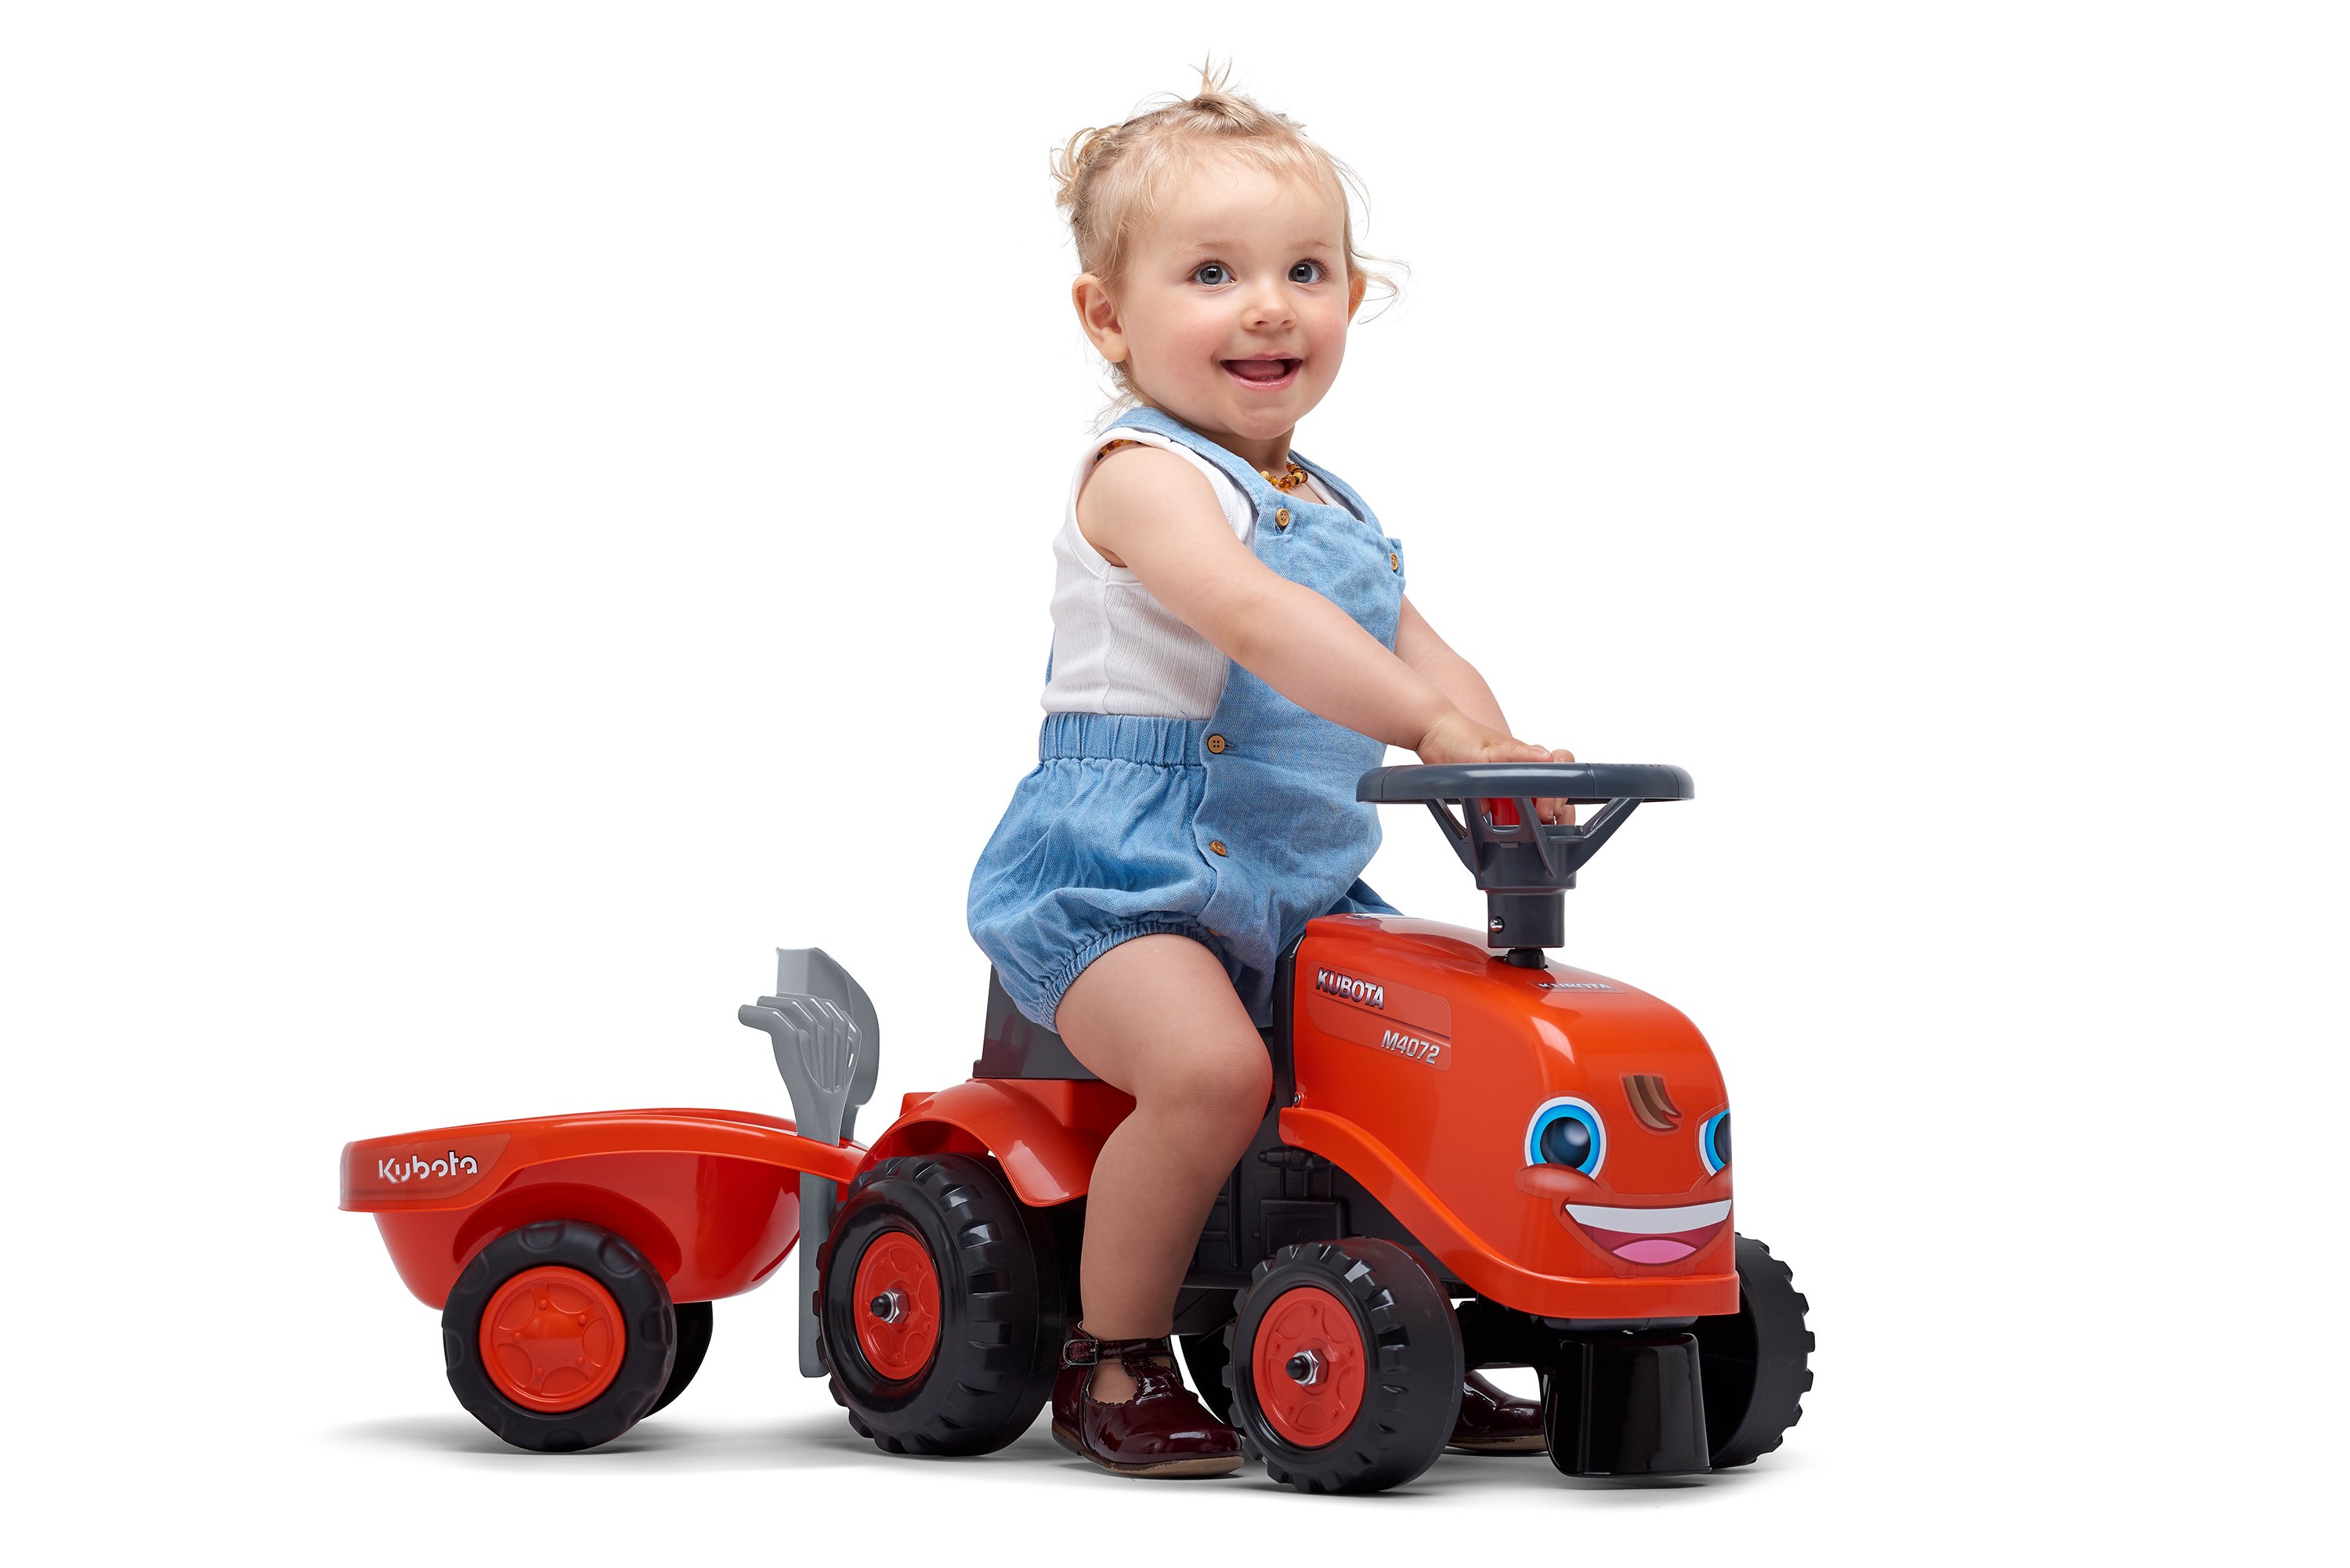 Дитячий трактор-каталка Falk 260C Kubota, з причепом, помаранчевий (260C) - фото 3